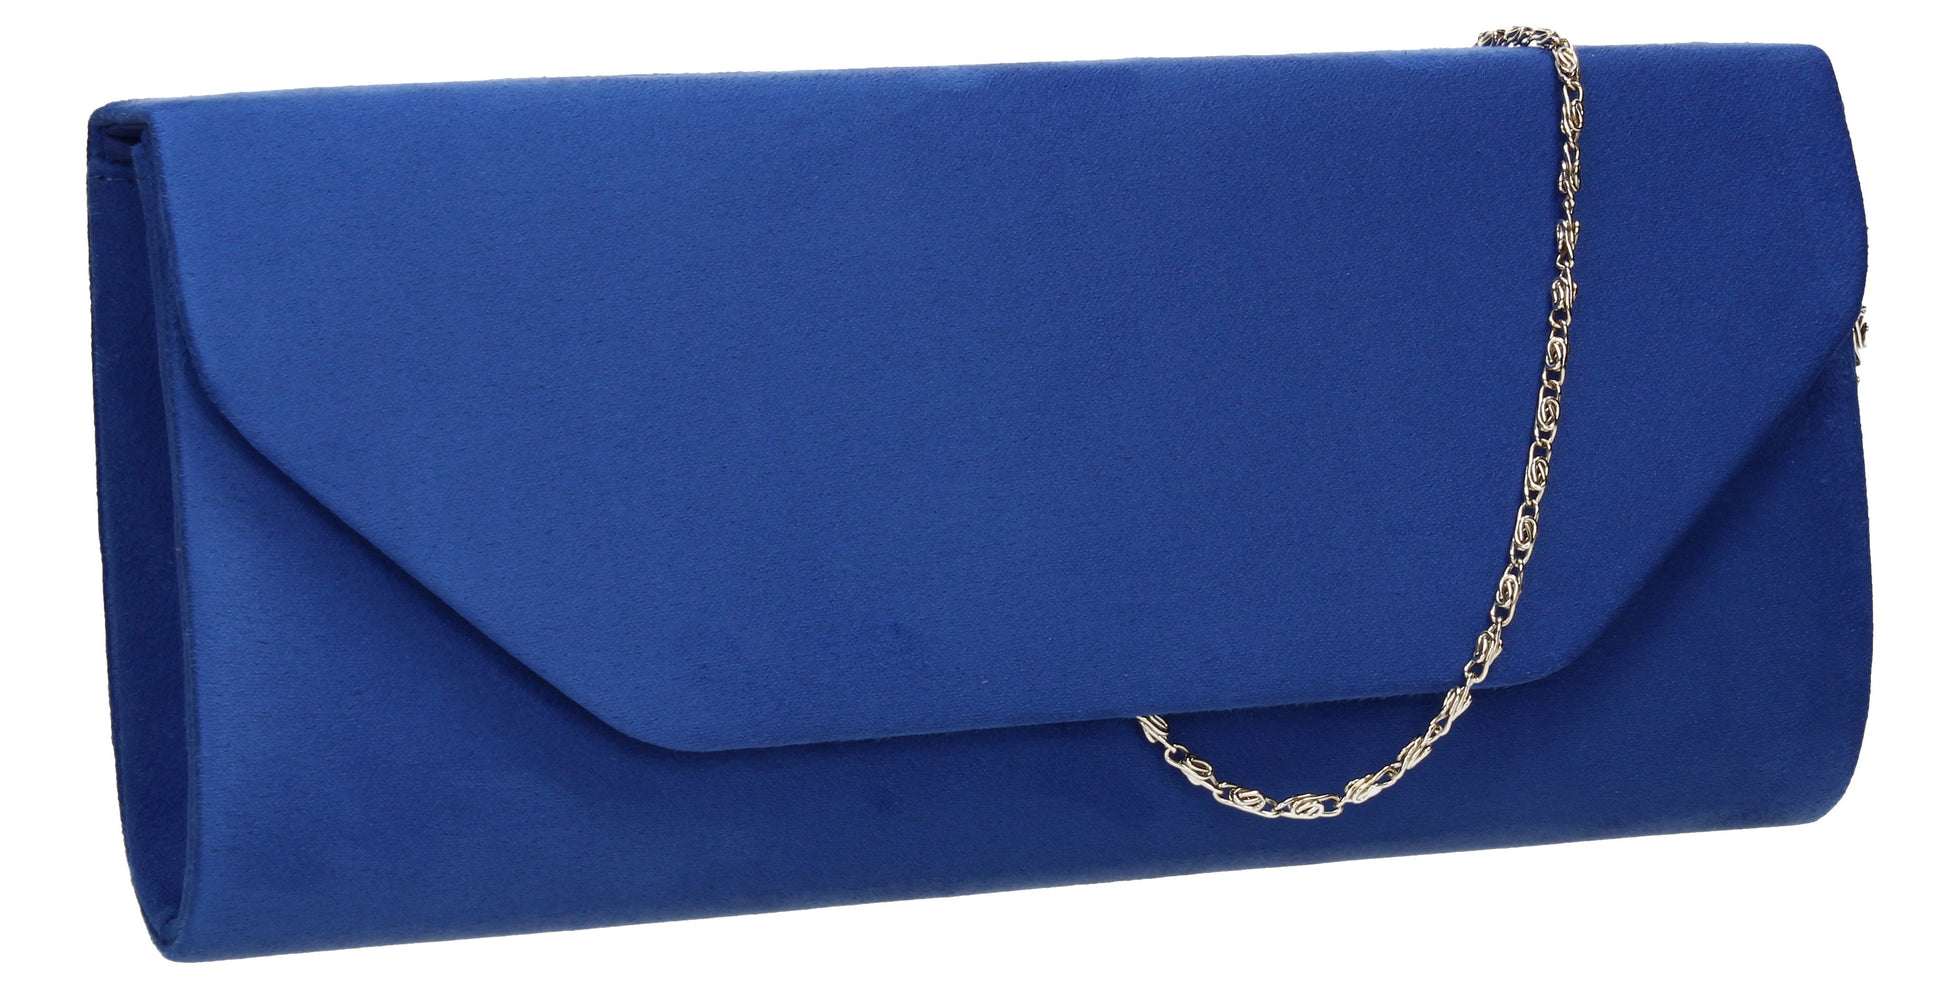 SWANKYSWANS Isabella Velvet Clutch Bag Royal Blue Cute Cheap Clutch Bag For Weddings School and Work